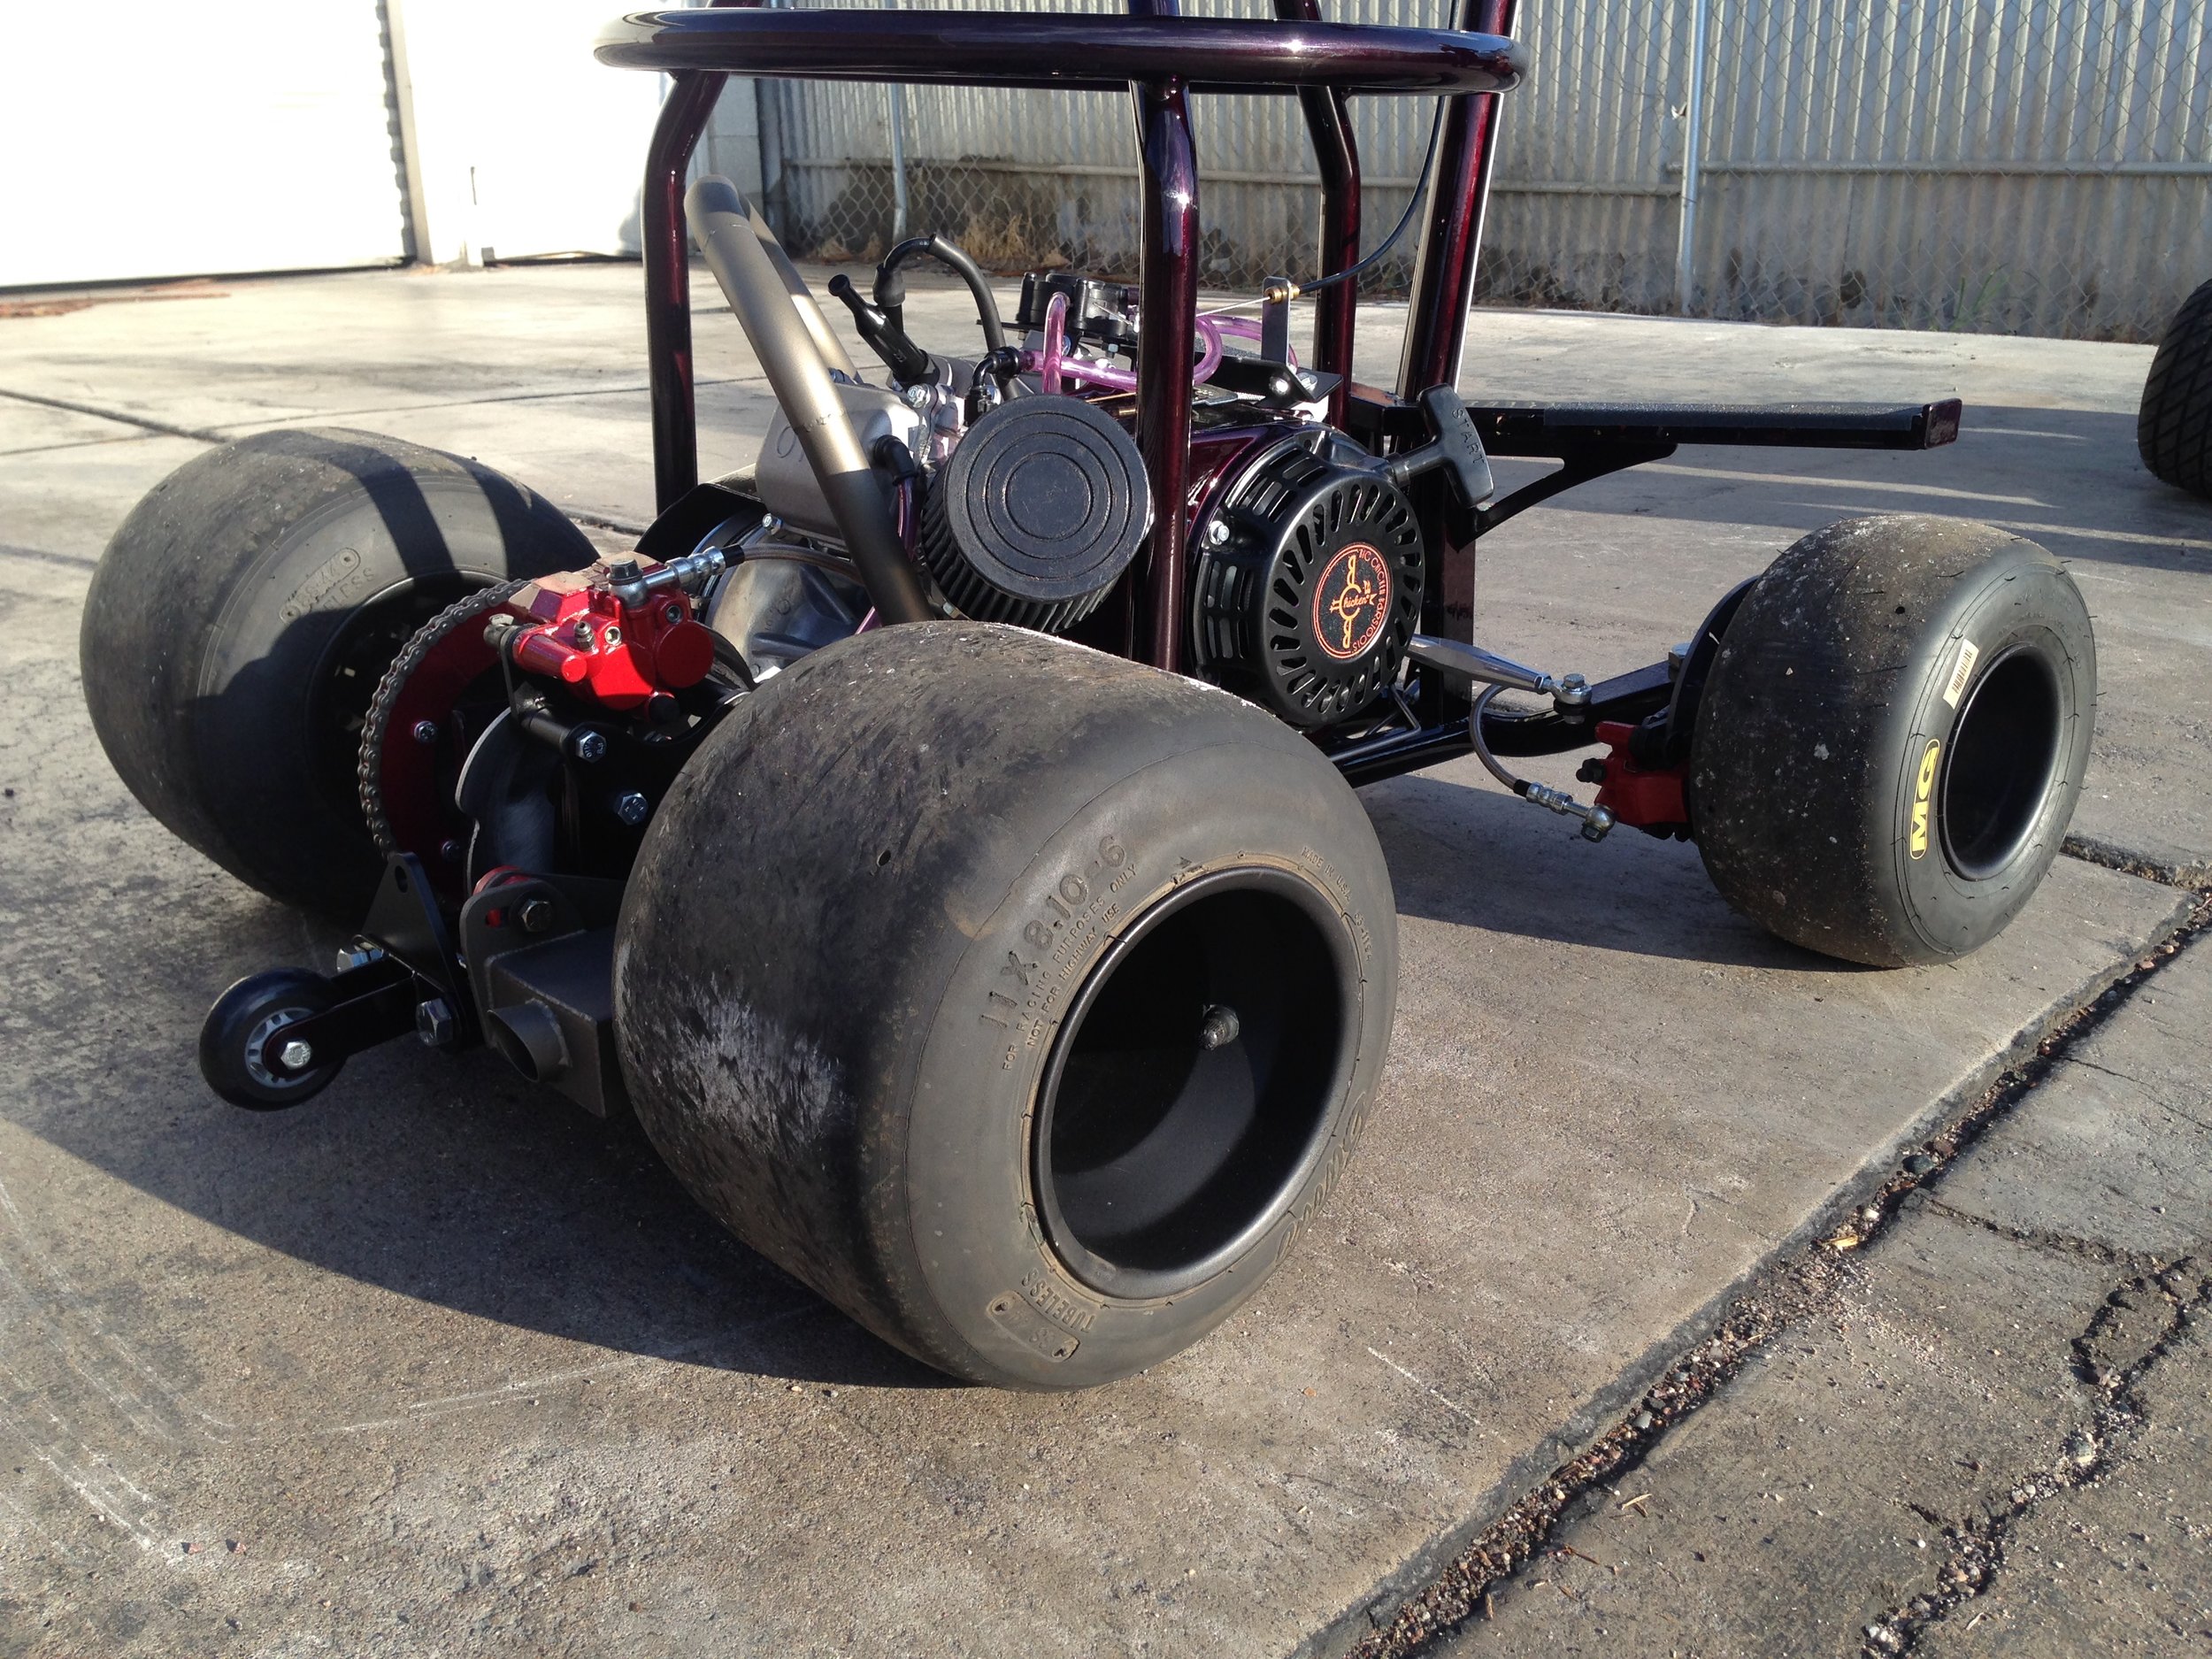 NEW 8L Plastic Fuel Tank Go Kart Part Barstool Racer Racing Cart Floor Gas Tank